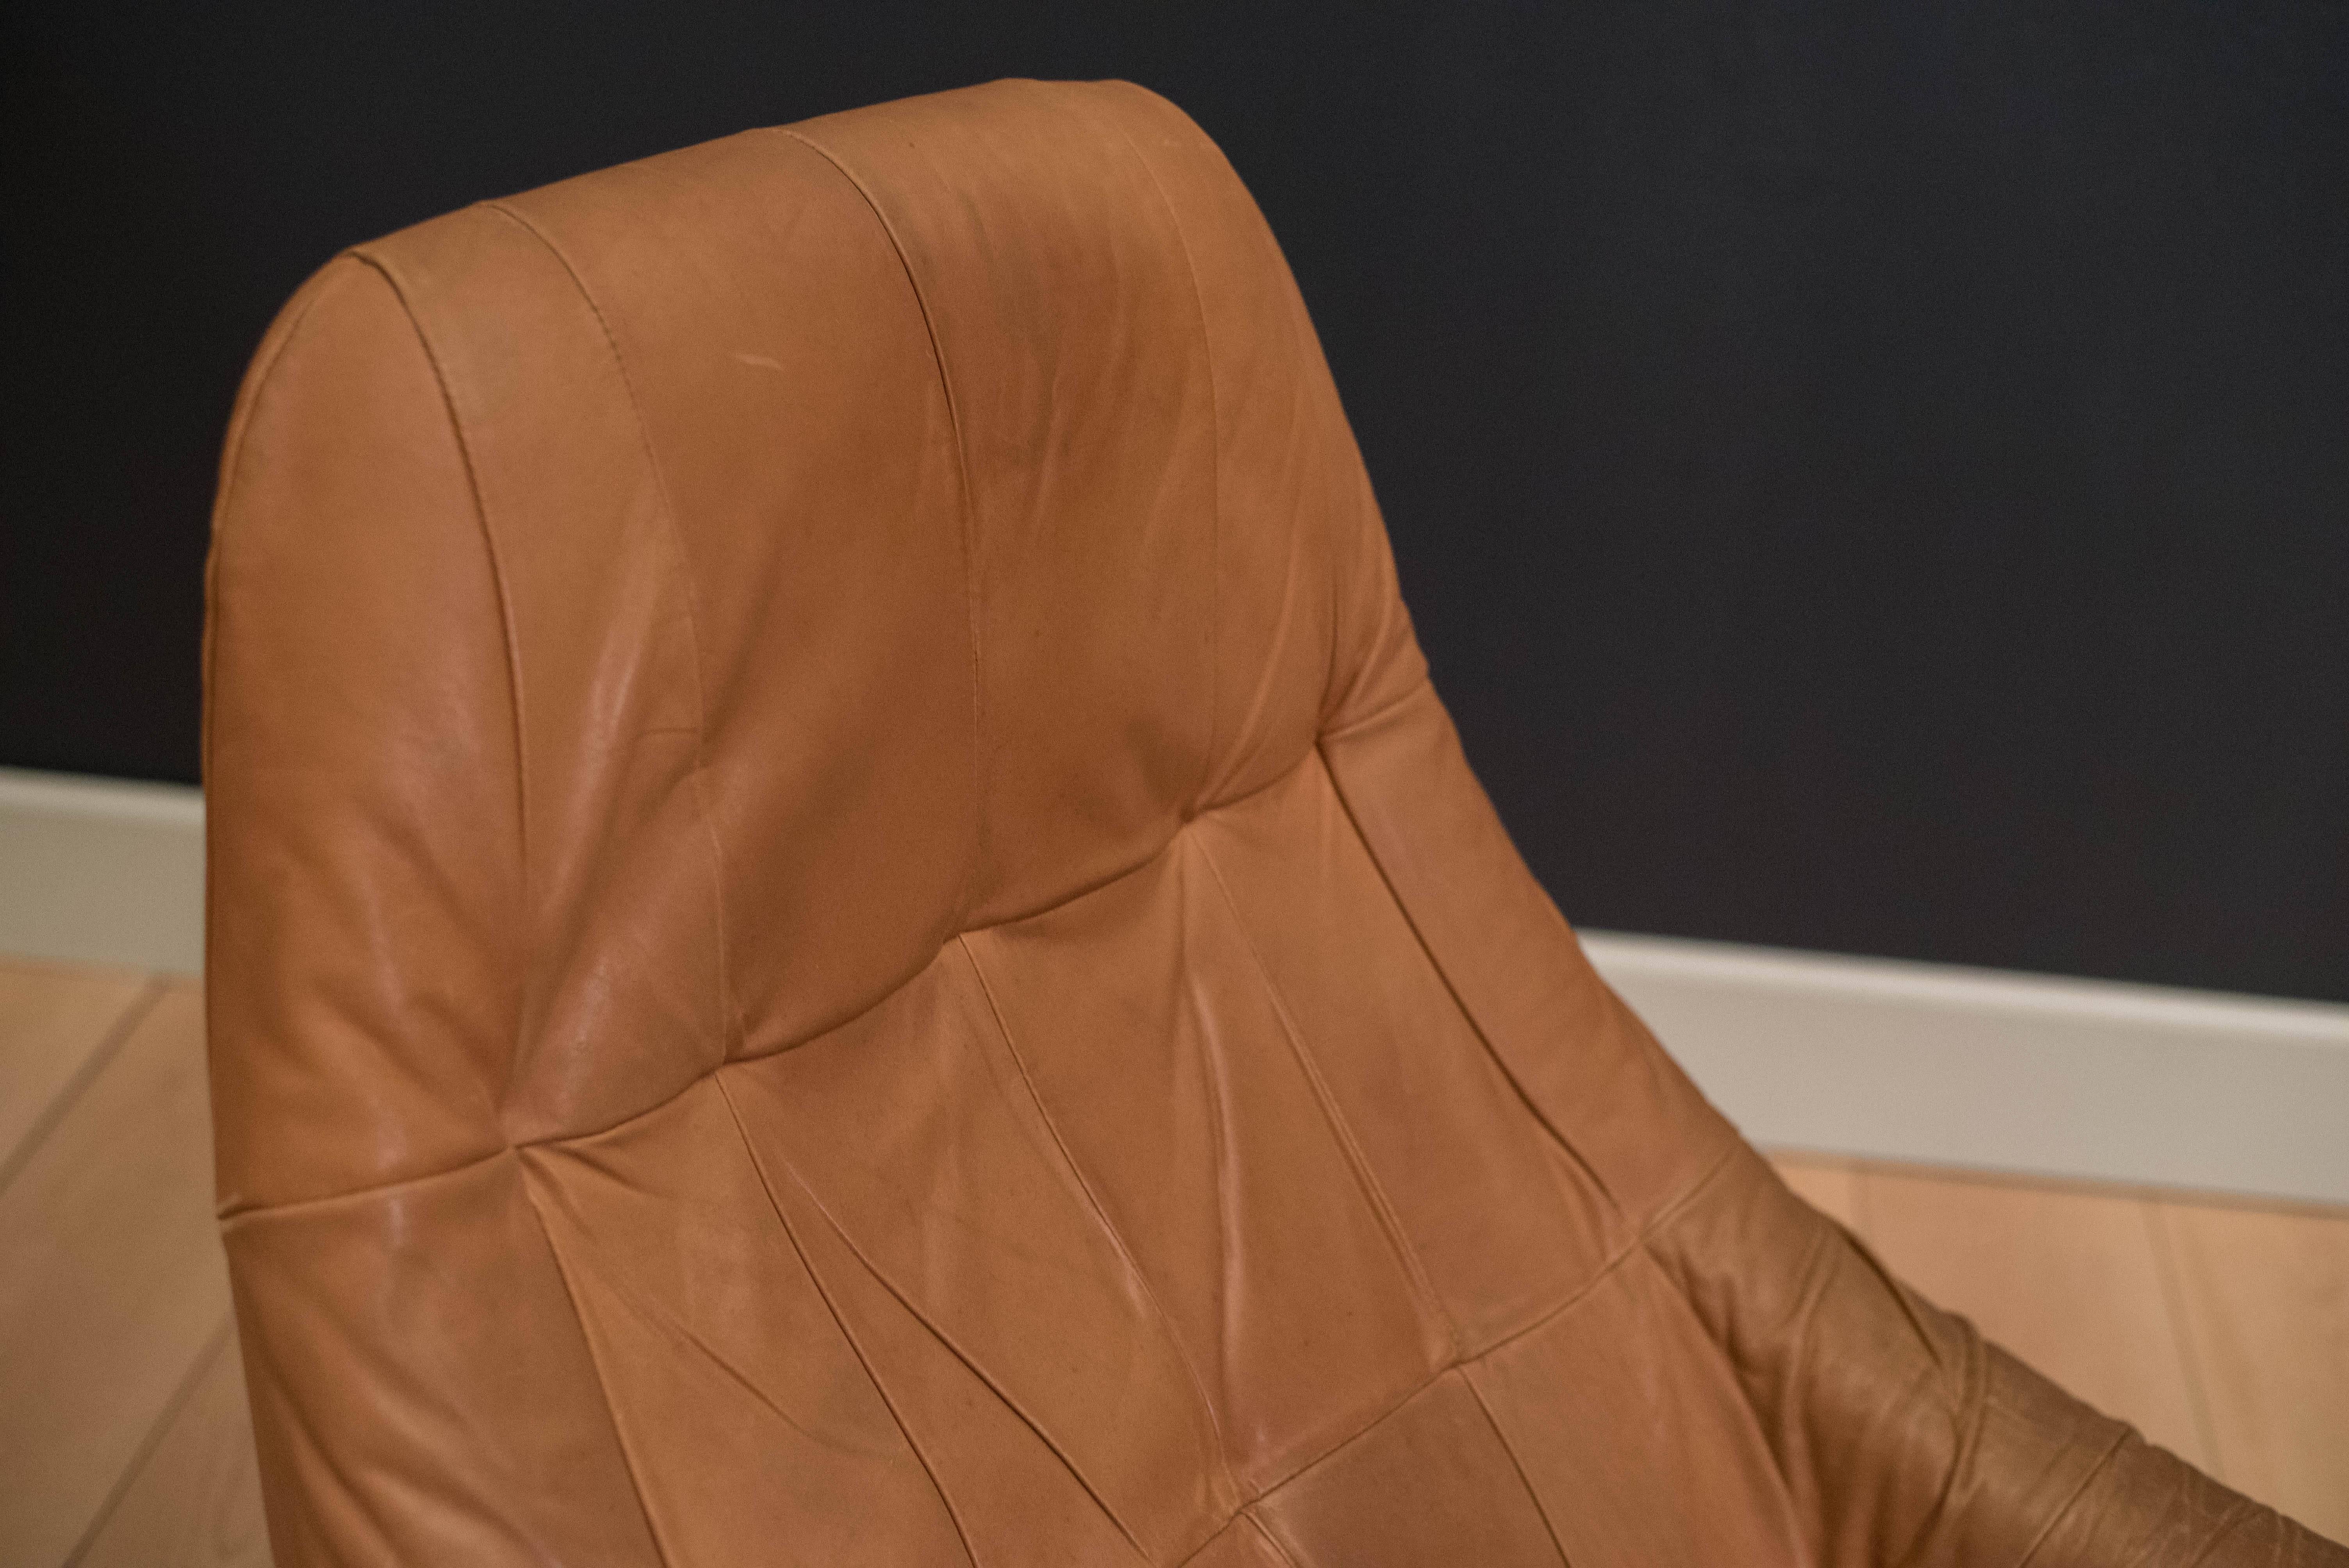 brazilian leather chair